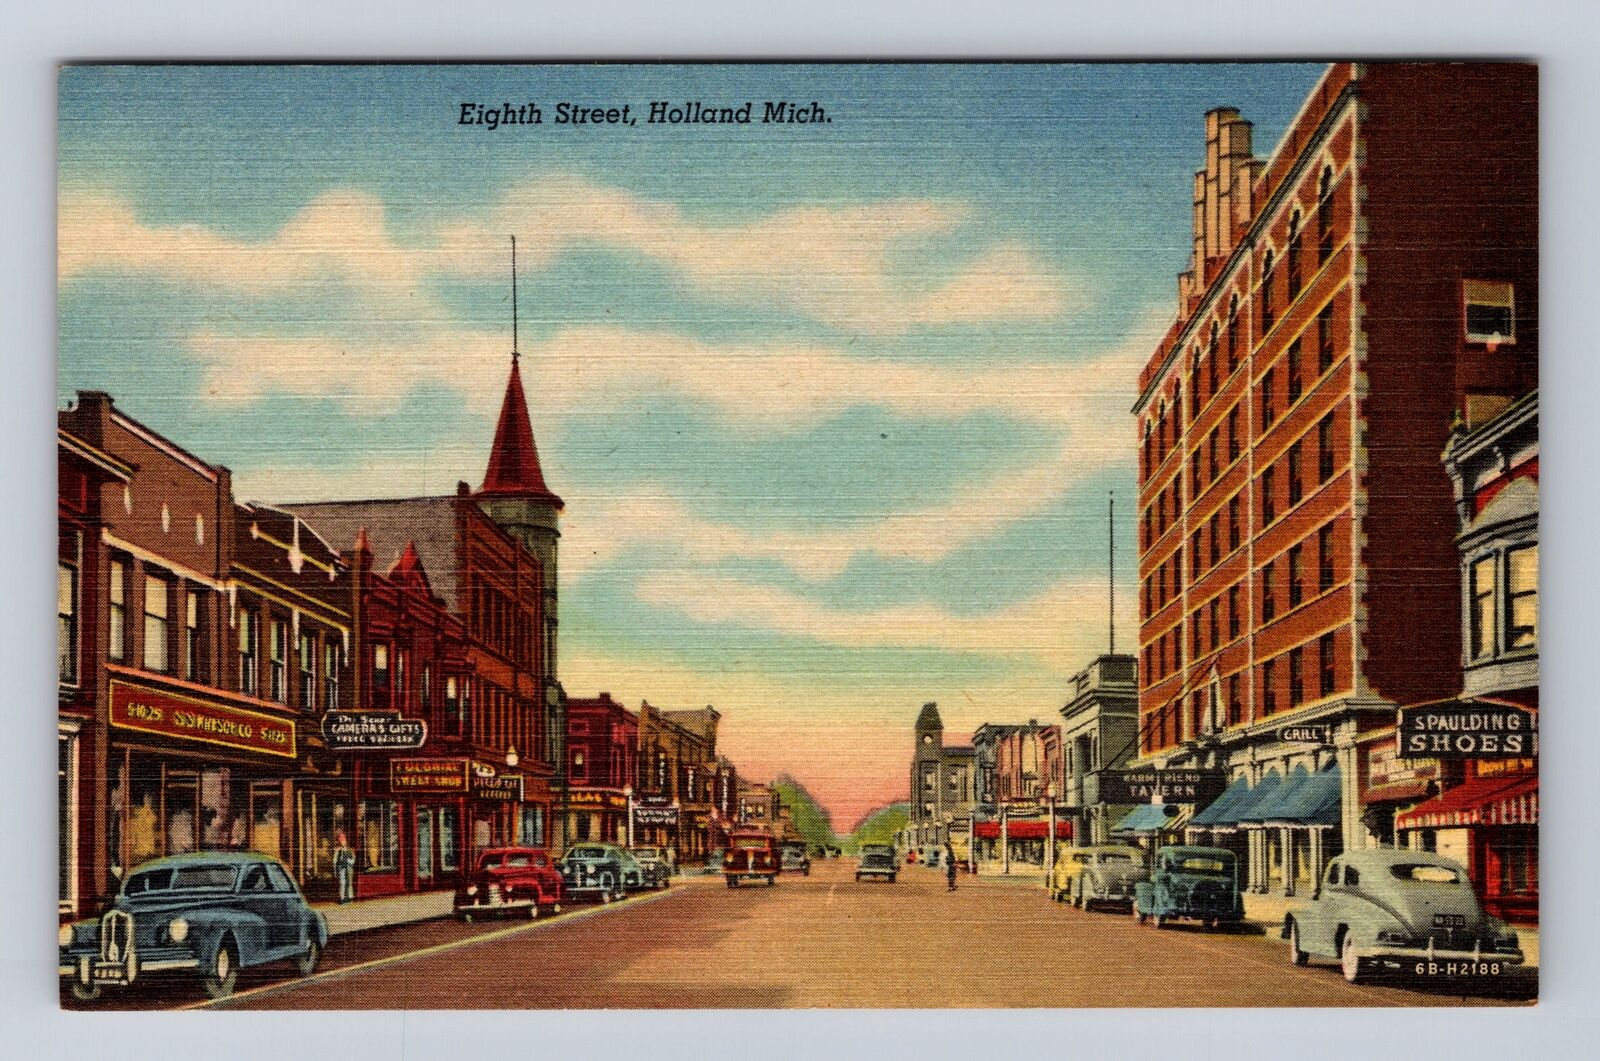 Holland MI-Michigan, Eighth Street, Antique Vintage Souvenir Postcard